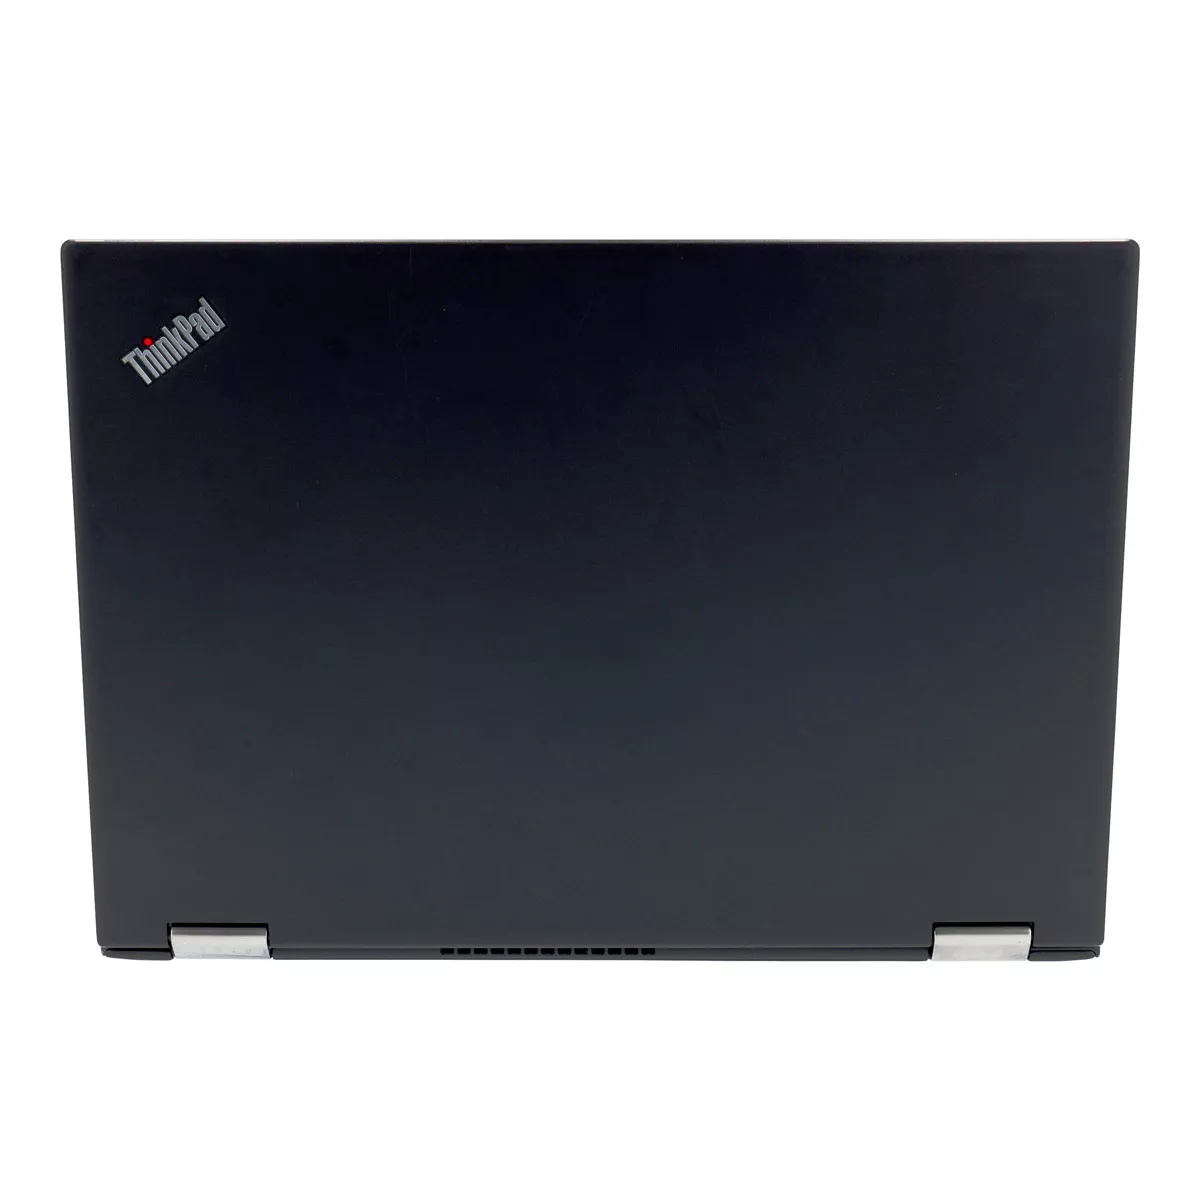 Lenovo ThinkPad X380 Yoga Core i5 8350U Full-HD Touch 16 GB 500 GB nVME M.2 SSD Webcam B